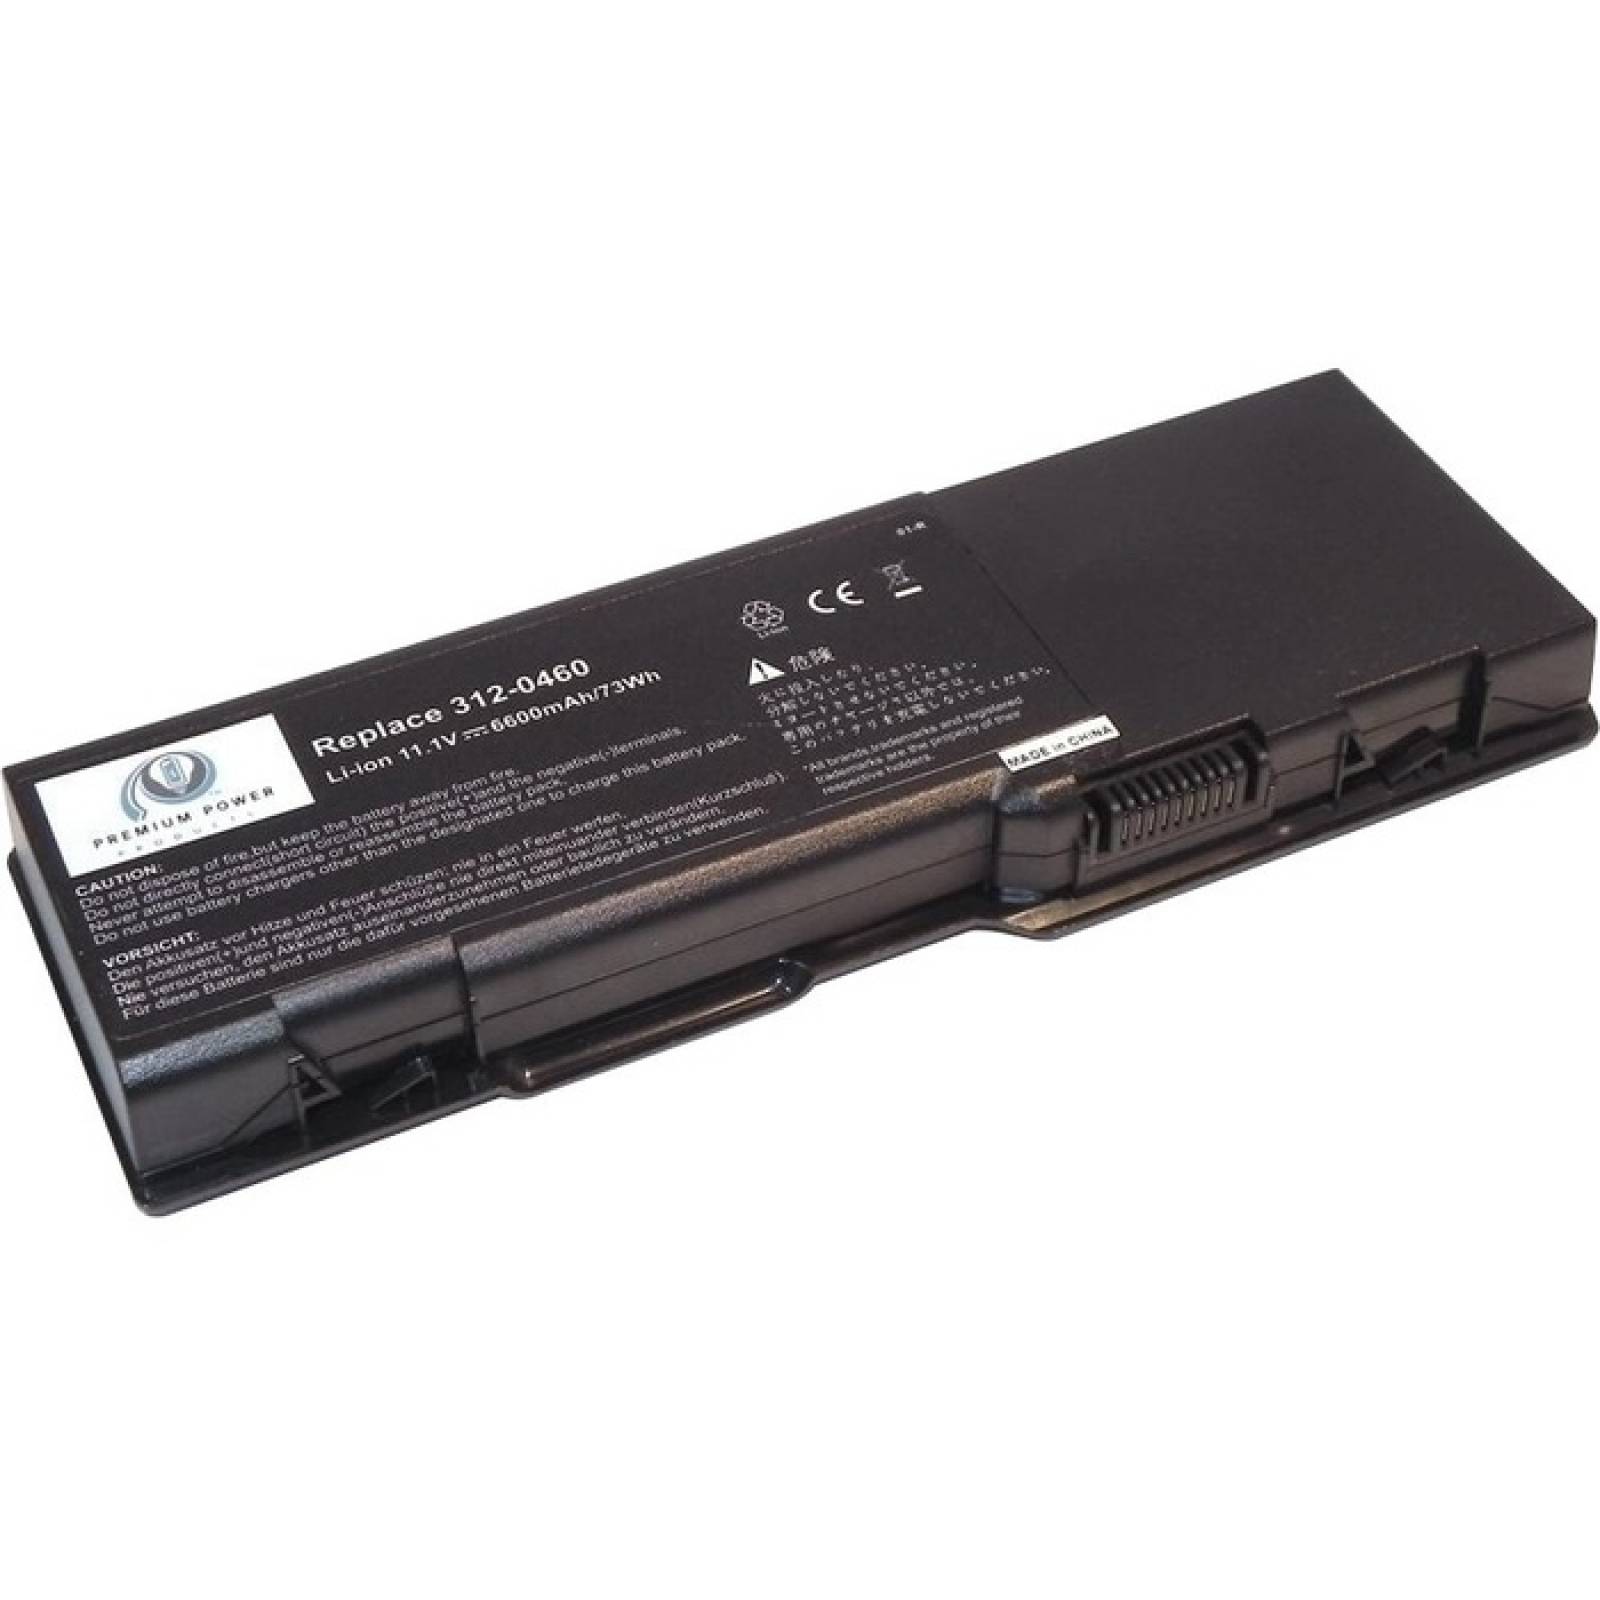 Premium Power Products Batera para porttil de 9 celdas para Dell Inspiron 6100 6400 Latitude E1505 131L